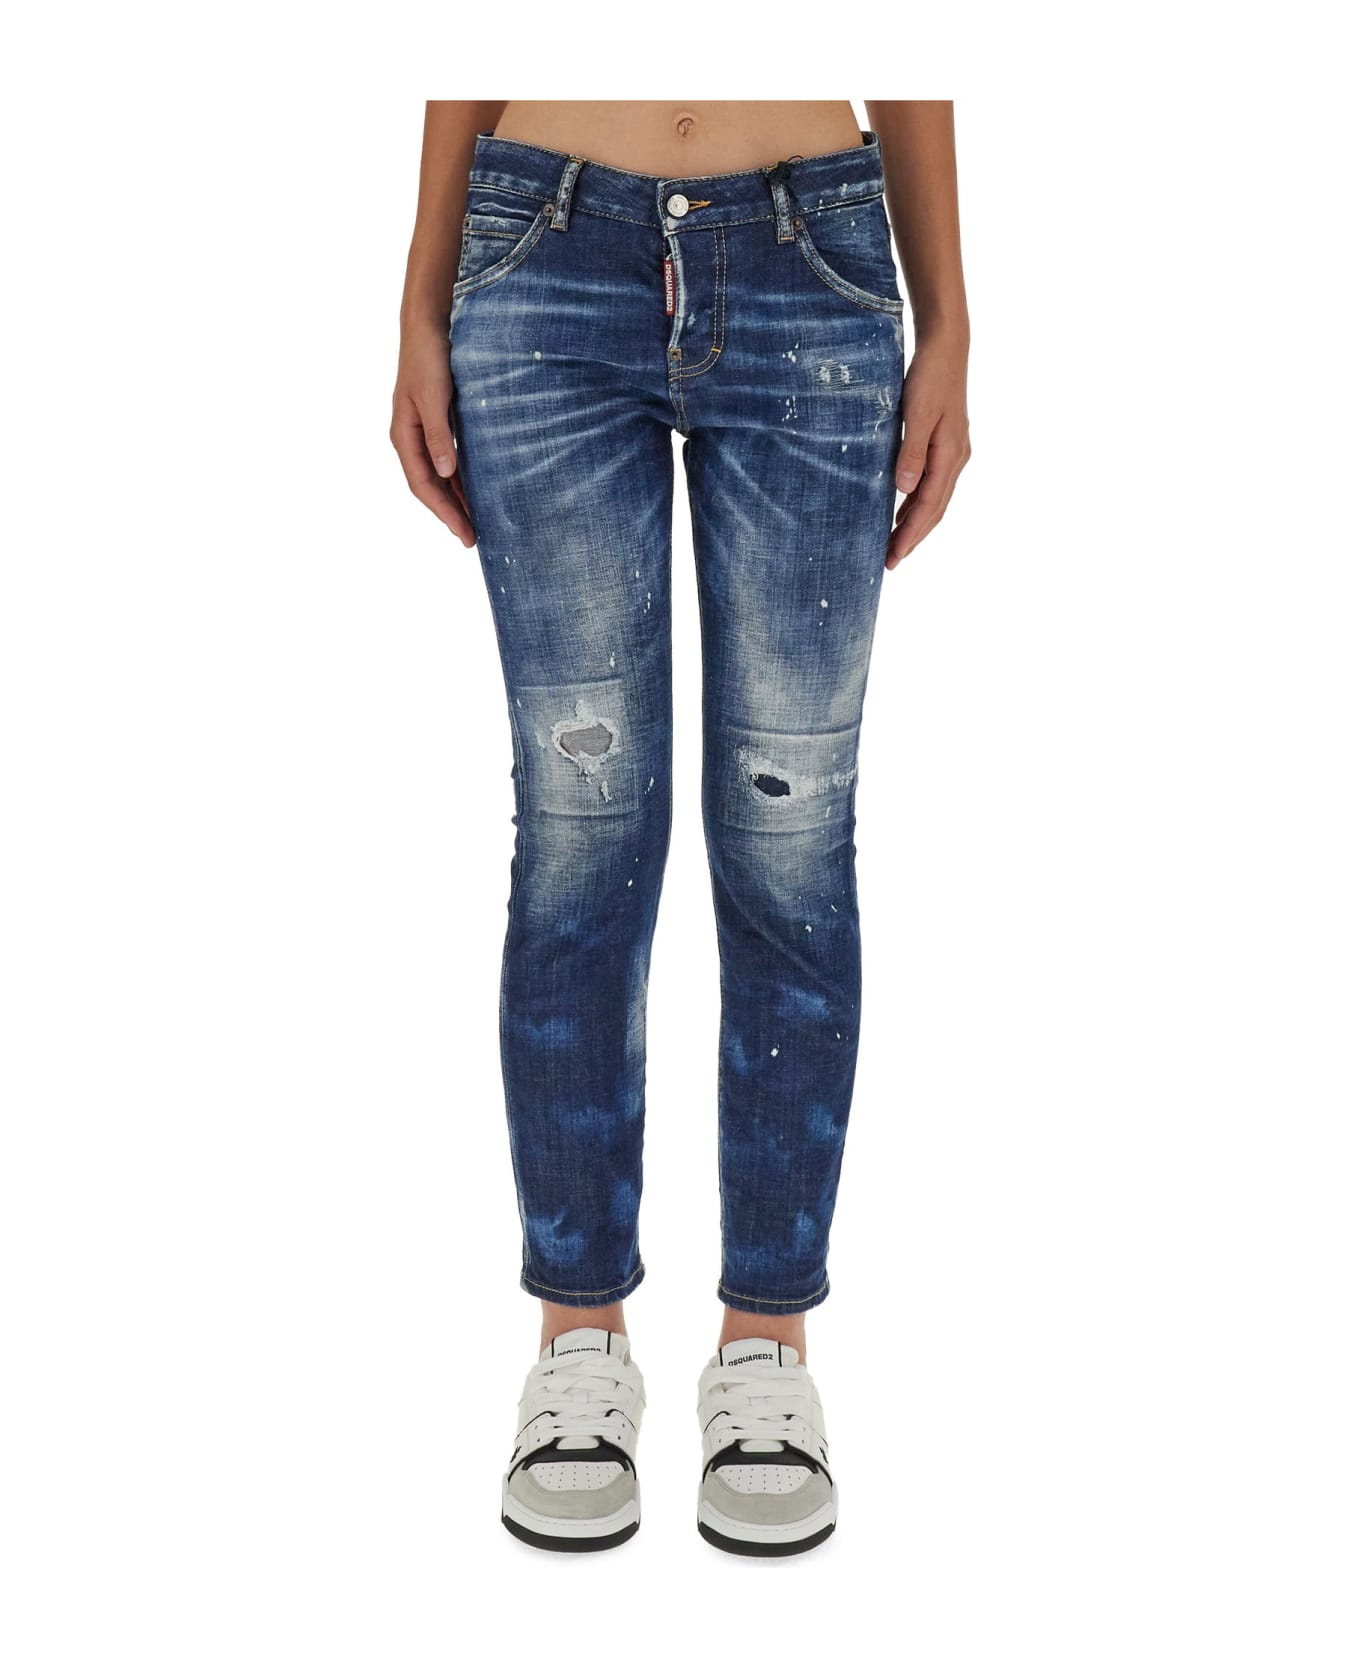 Dsquared2 Cool Girl Jeans - DENIM